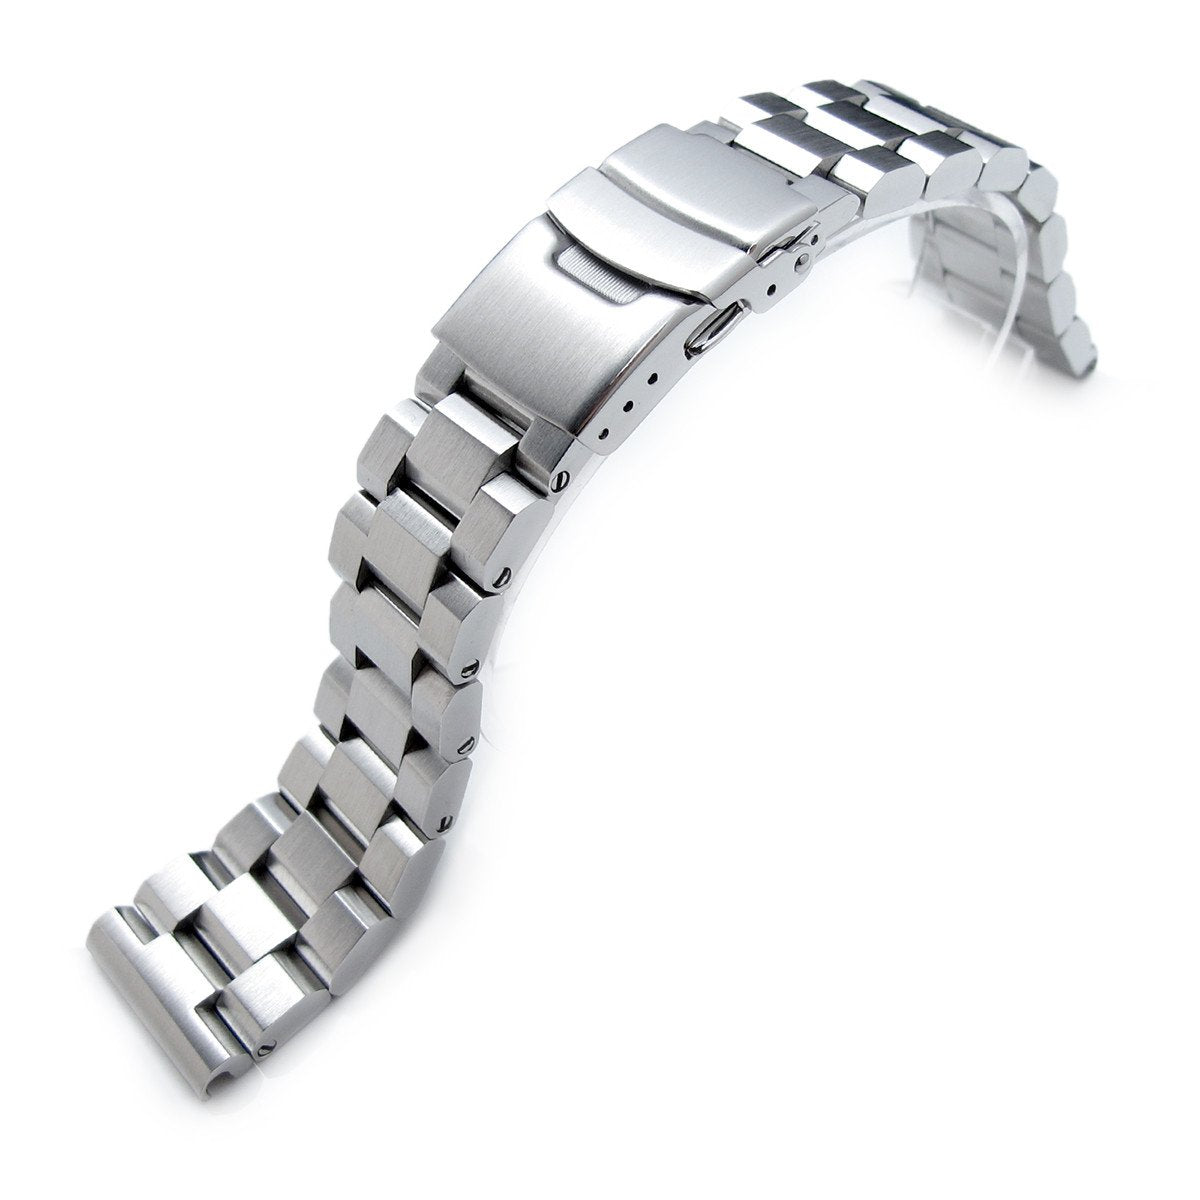 Seiko Mod SKX007 SKX009 Curved End Hexad Bracelet  Strapcode